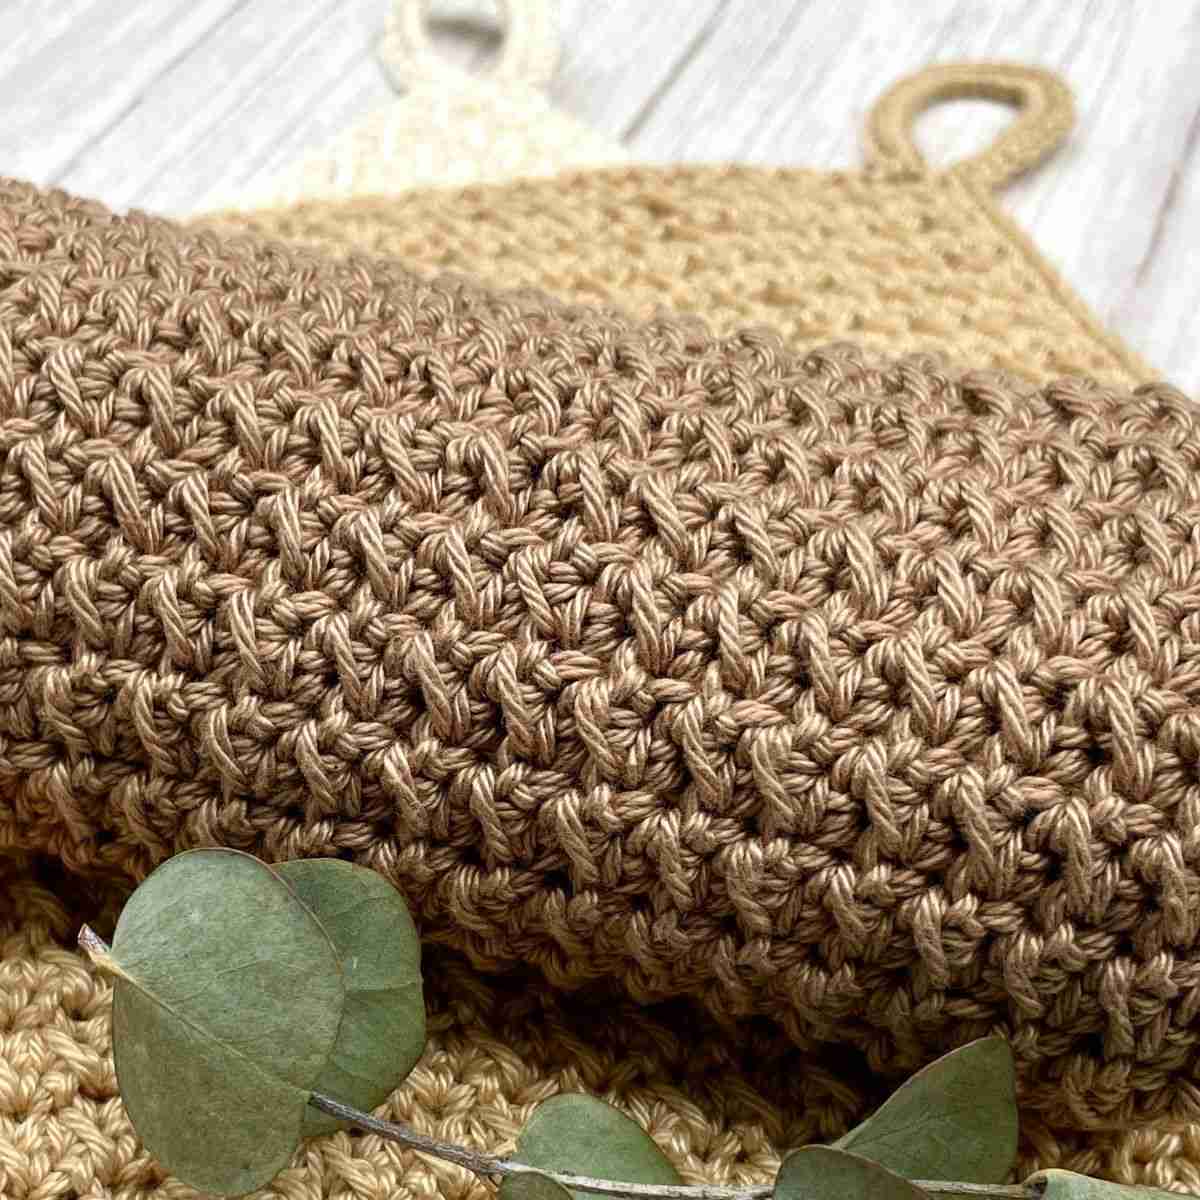 How to crochet even moss stitch, easy stitch tutorial